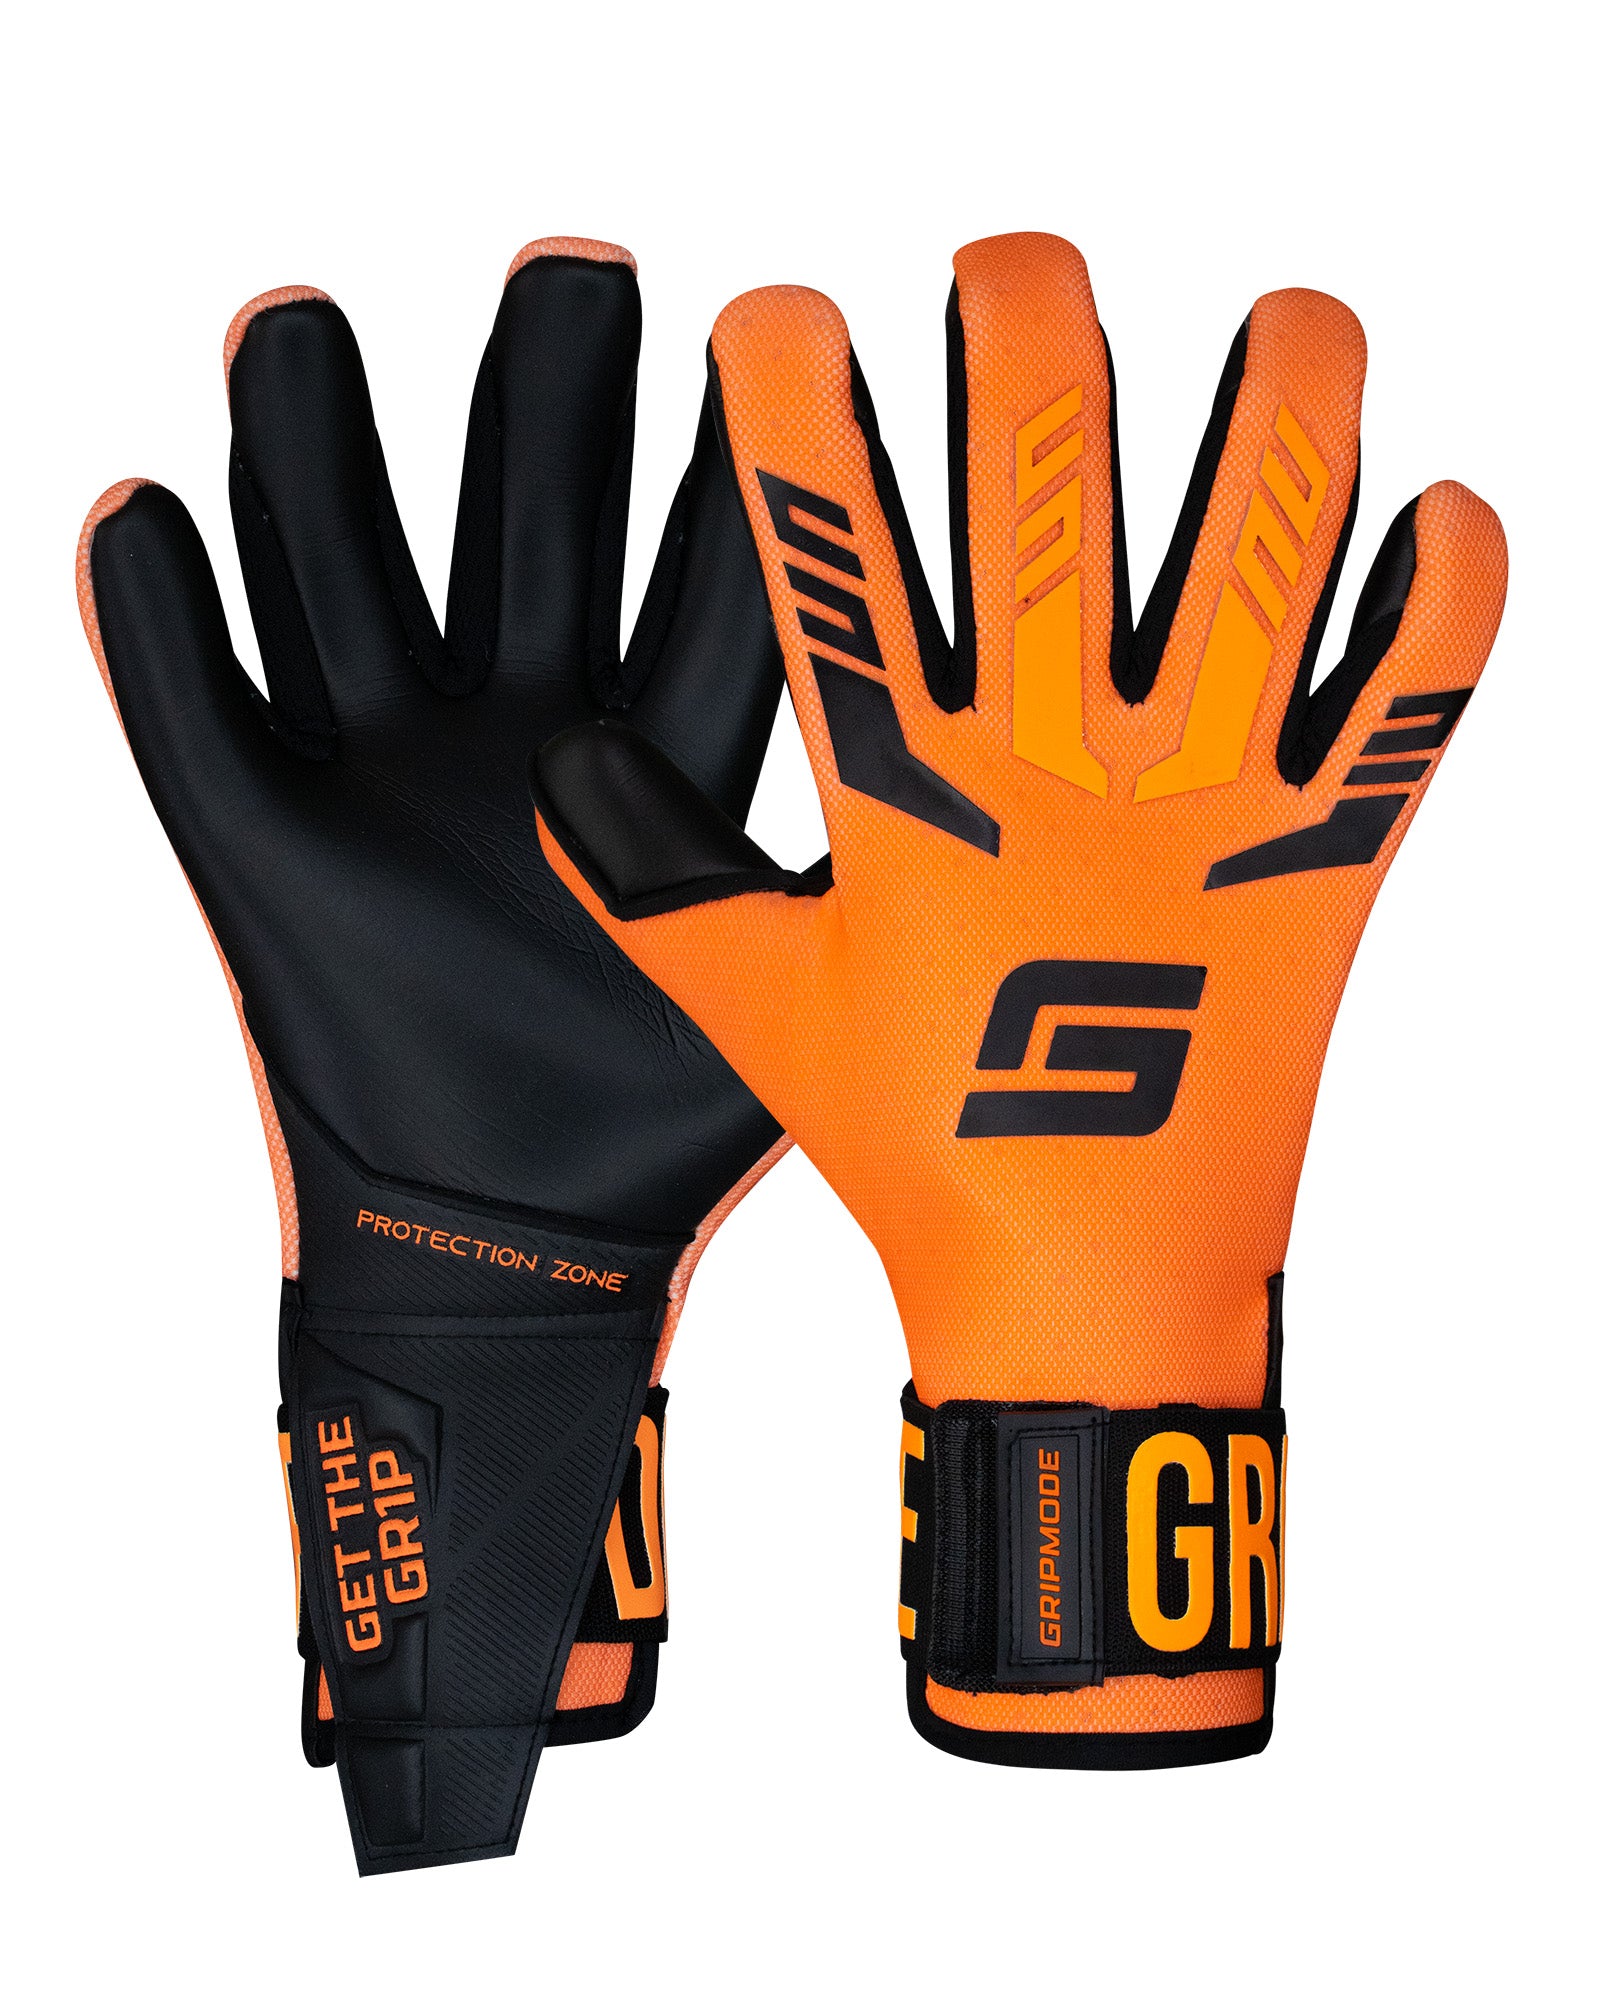 The best goalkeeper gloves - GRIPMODE